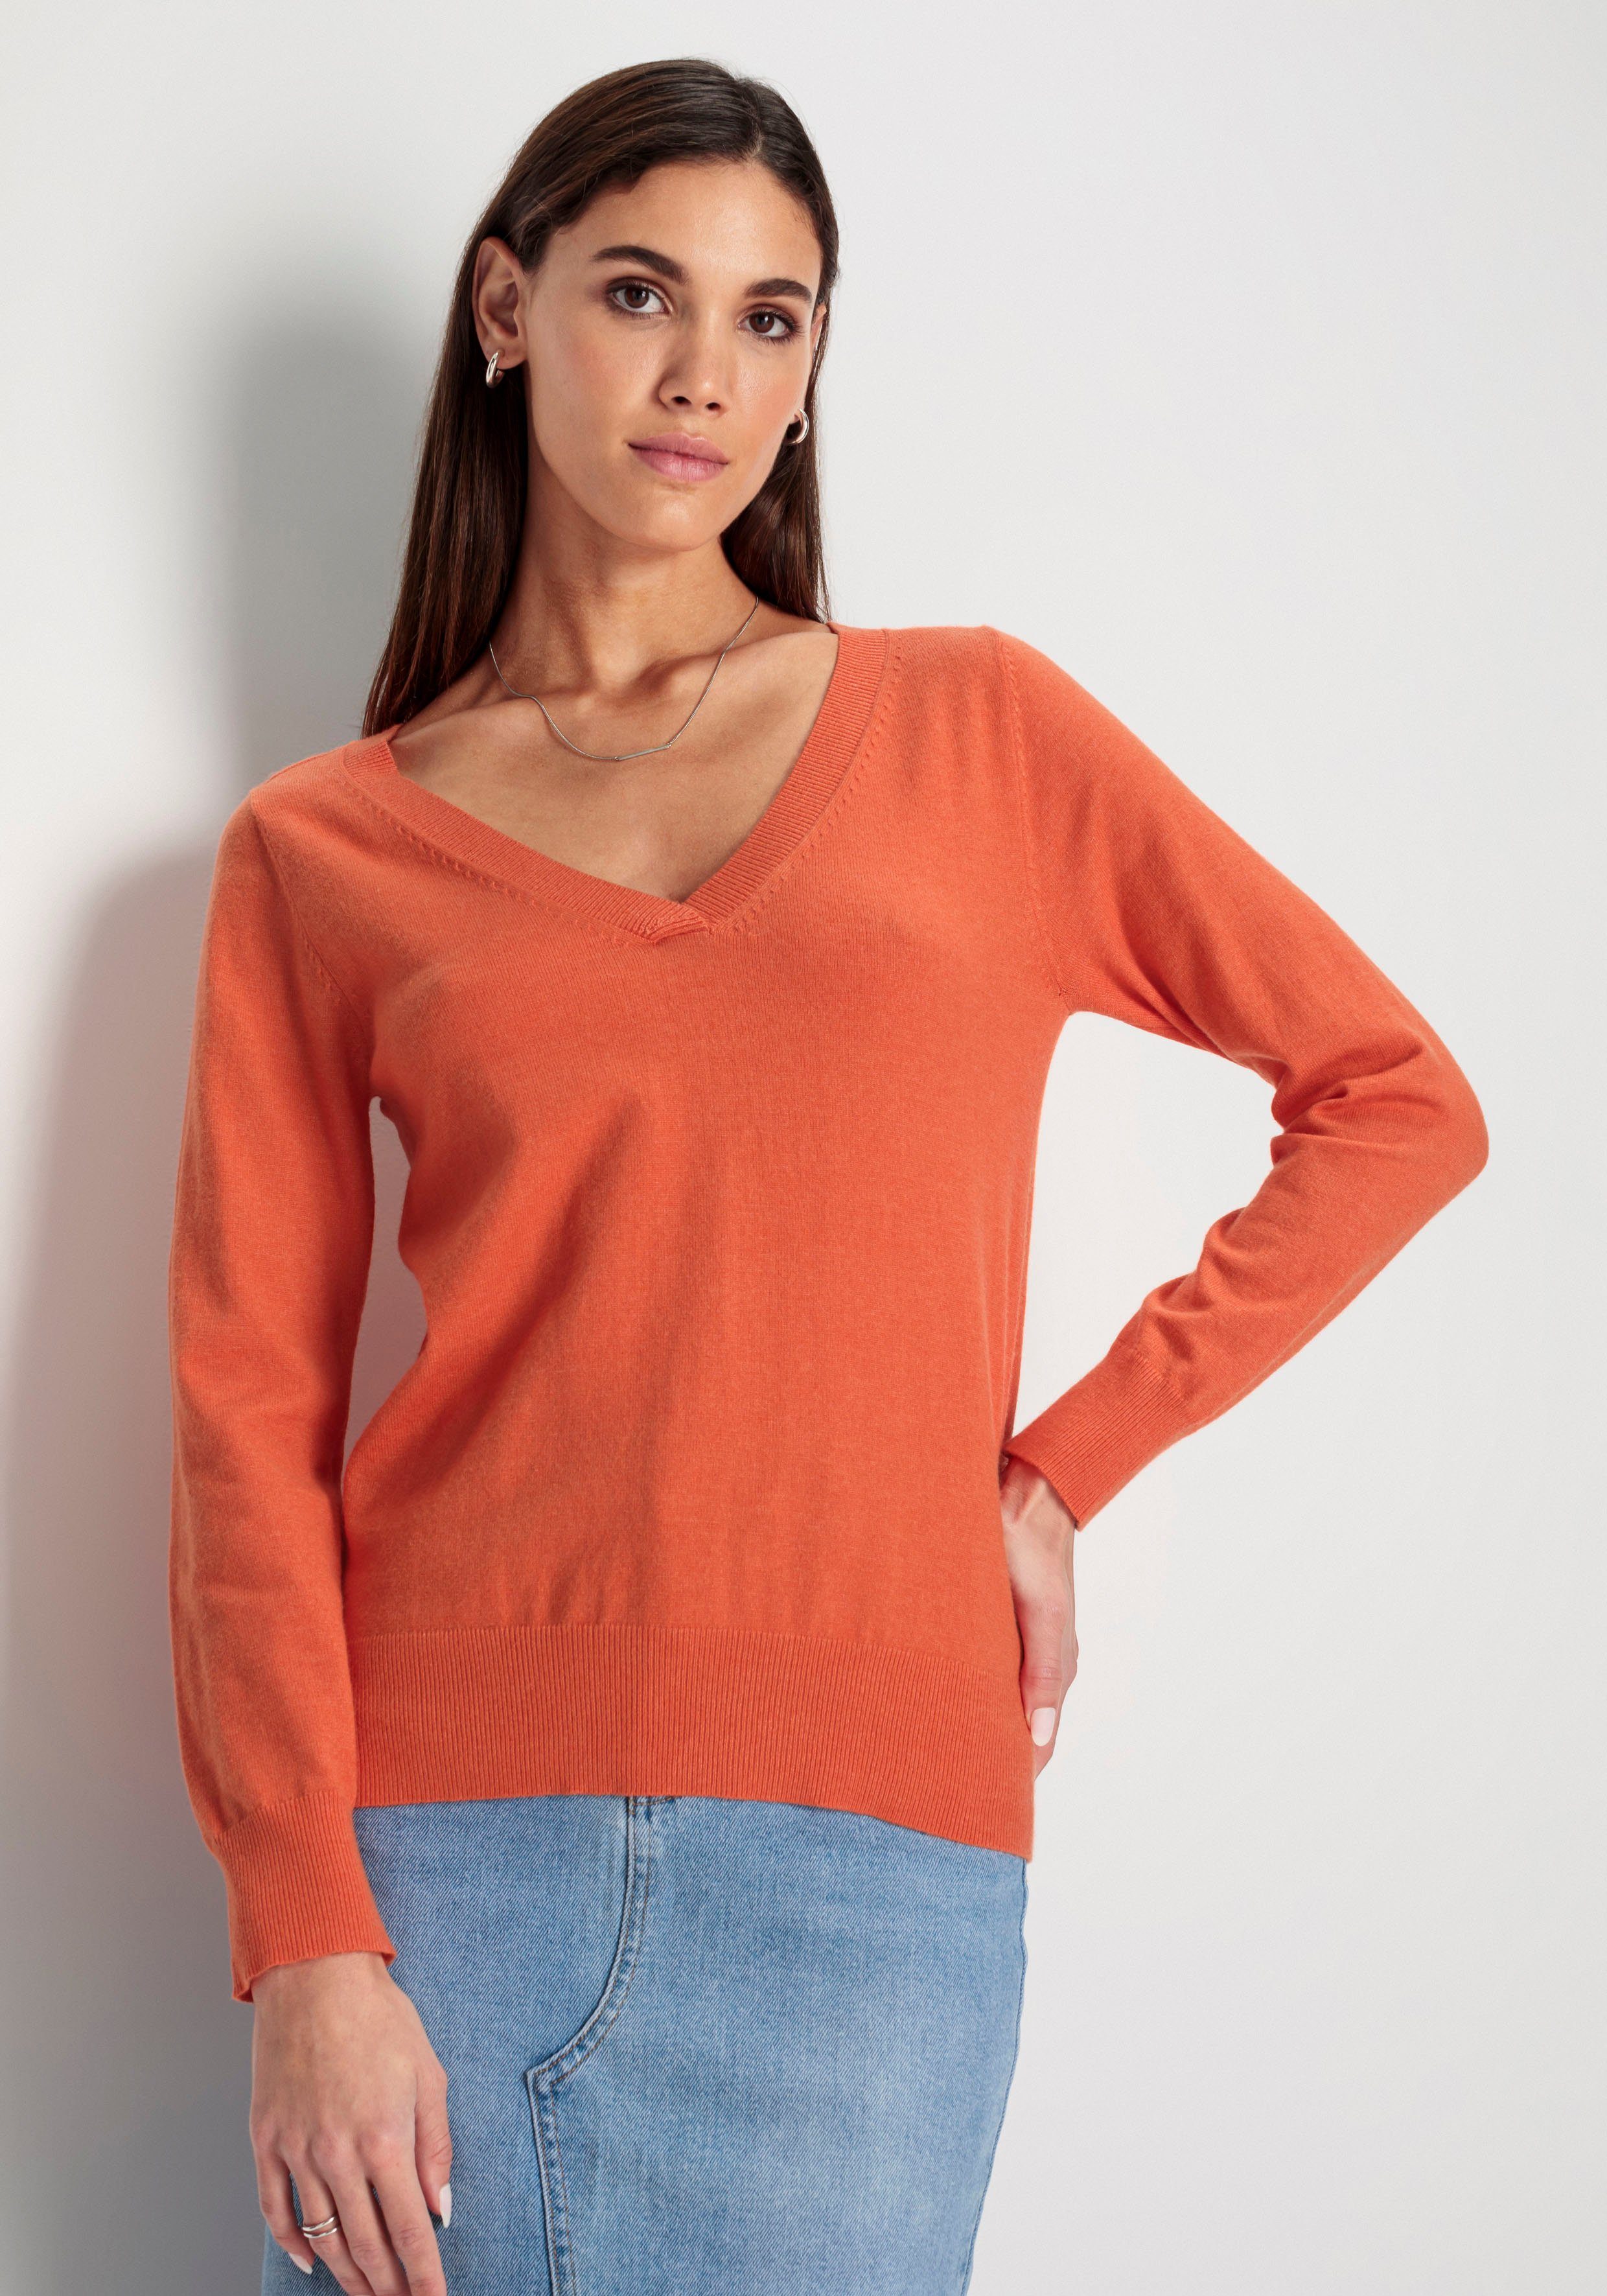 HECHTER PARIS V-Ausschnitt-Pullover in melange Optik - NEUE KOLLEKTION orange melange